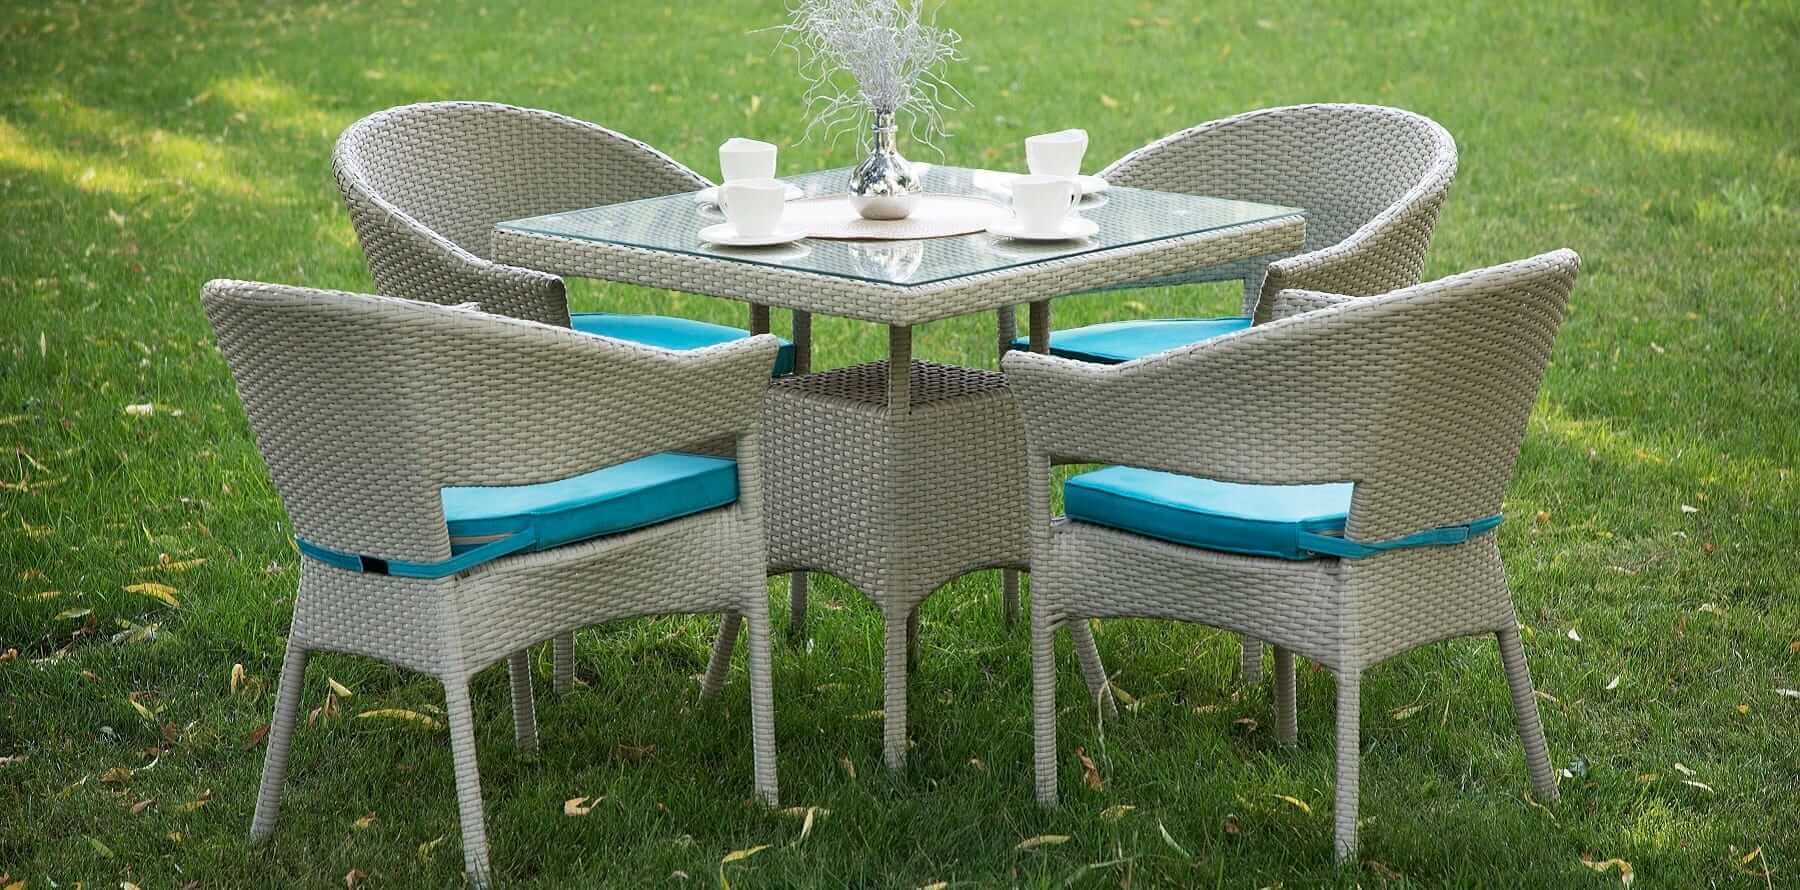 decorose patio dining furniture yuka model0 - ست میز صندلی تراس حصیری چهار نفره مدل راوش -  - patio-dining-furniture